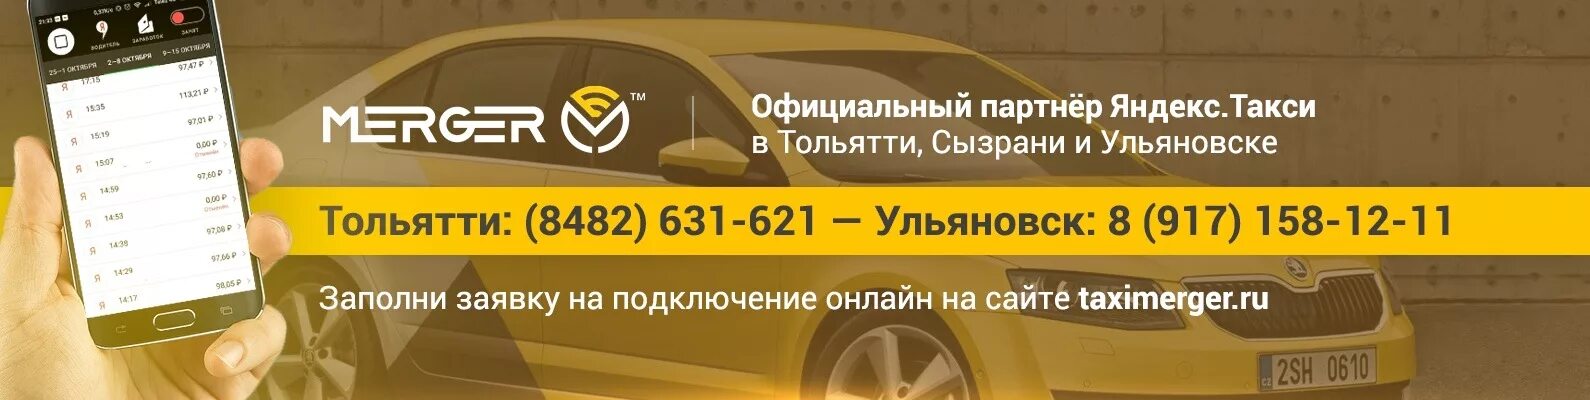 Такси телефон для заказа тольятти. Такси Тольятти. Номера такси Тольятти.